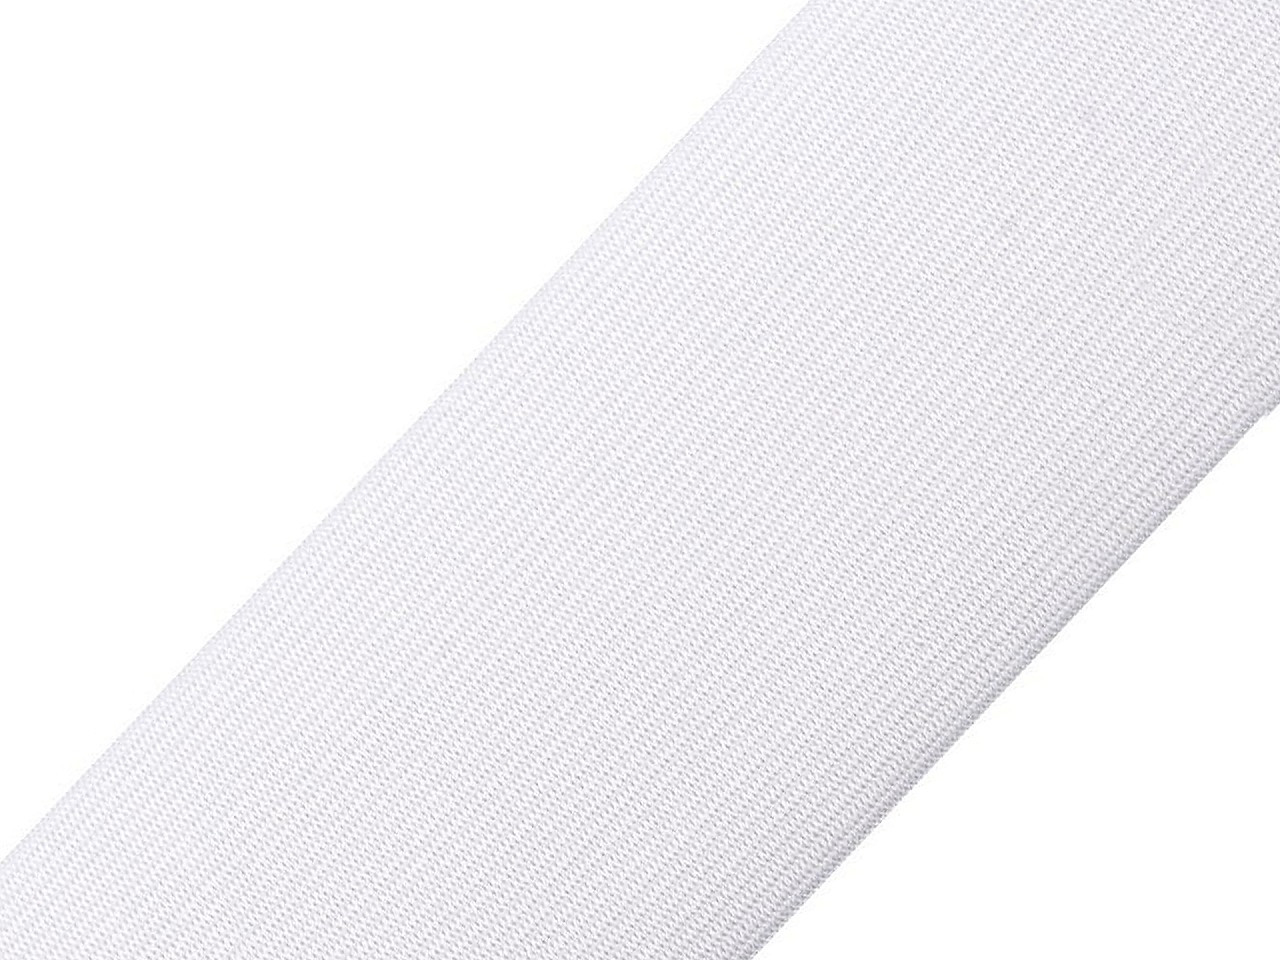 Pruženka hladká šíře 60 mm tkaná, barva 1 bílá